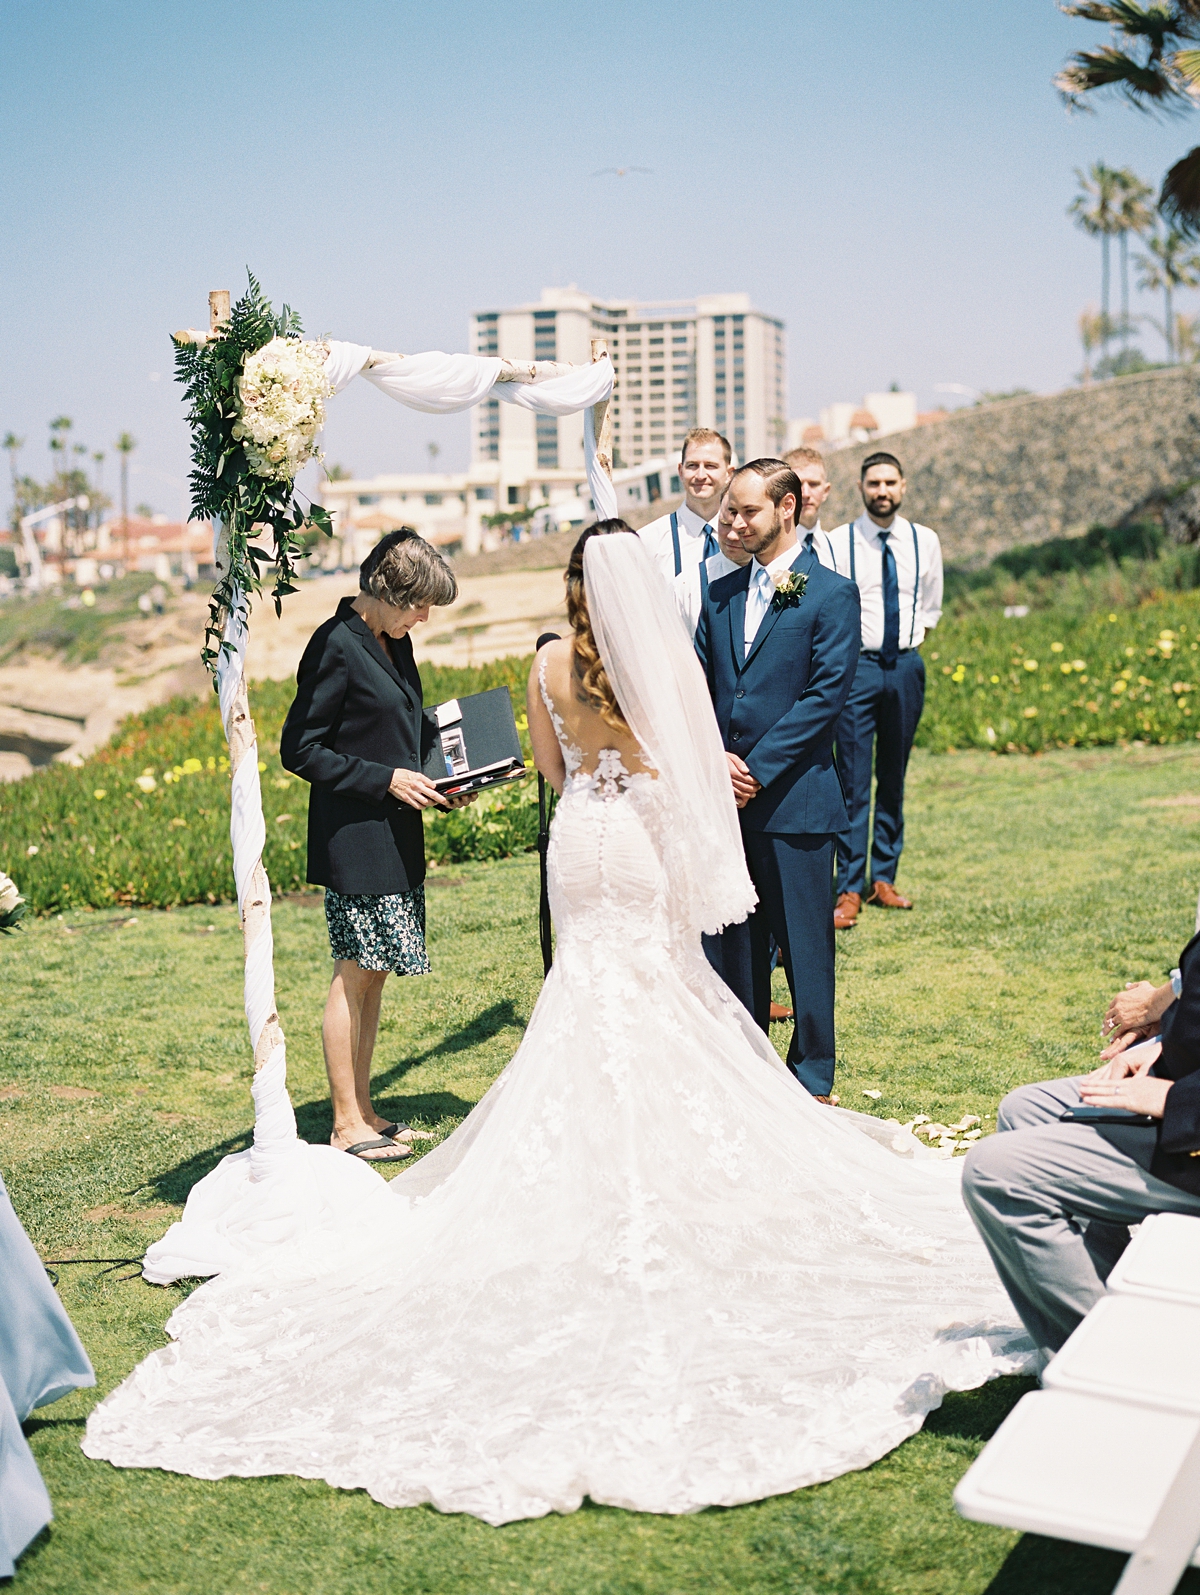 Catamaran San Diego La Jolla beach wedding - San Diego Photographer Jade Maria Photography